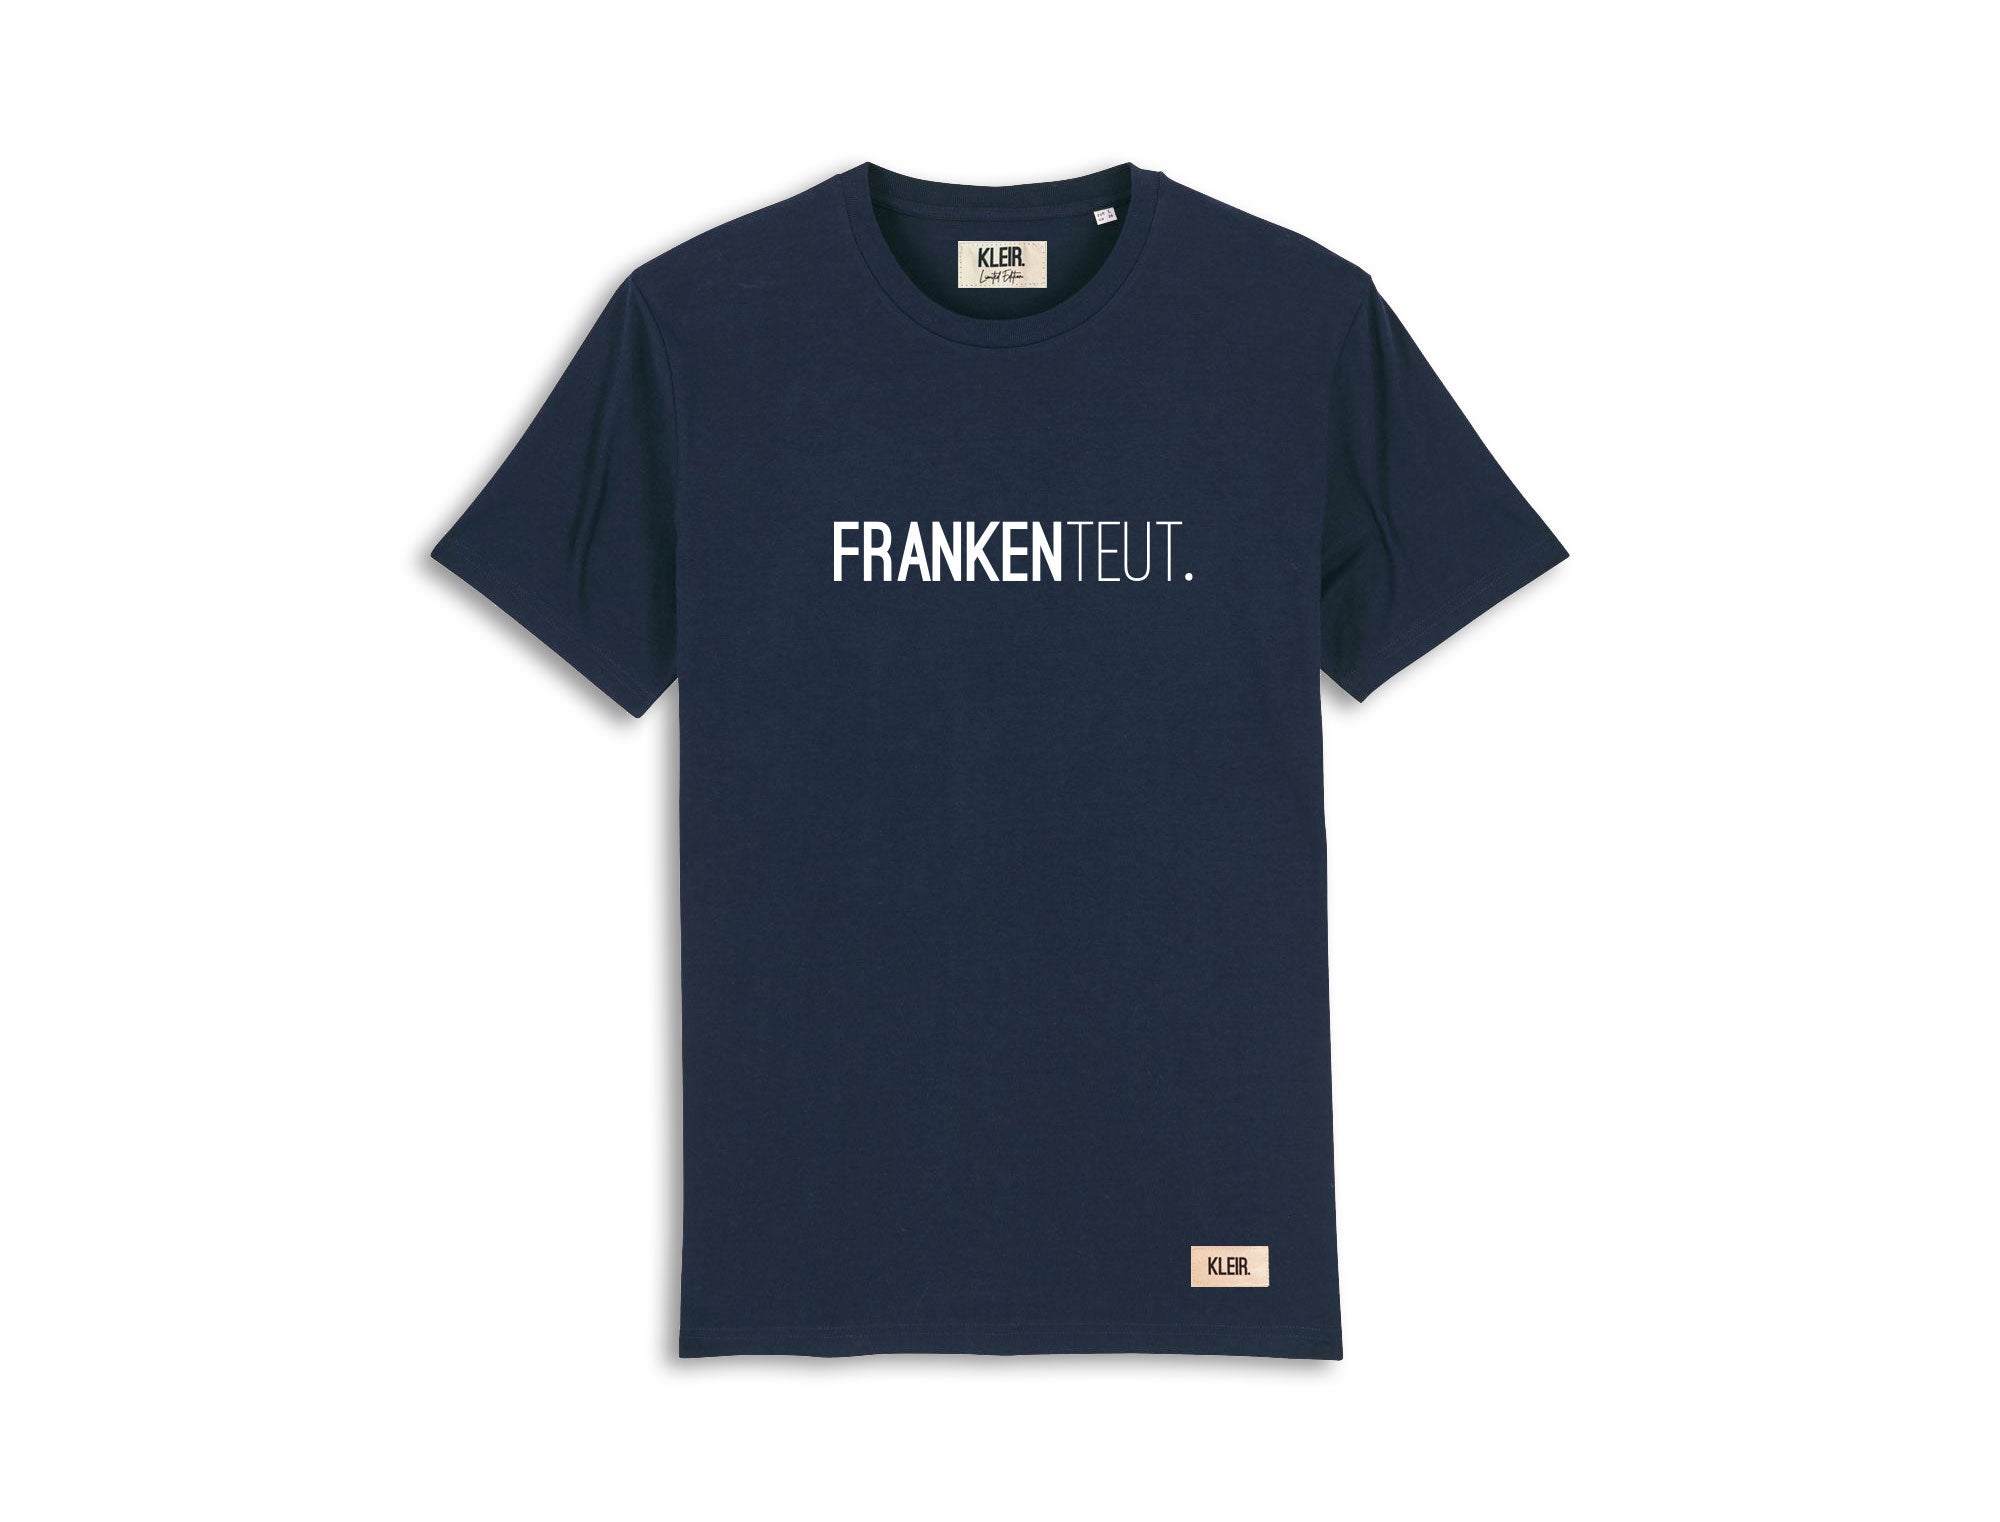 Donkerblauwe T-shirt met opdruk FRANKENTEUT.